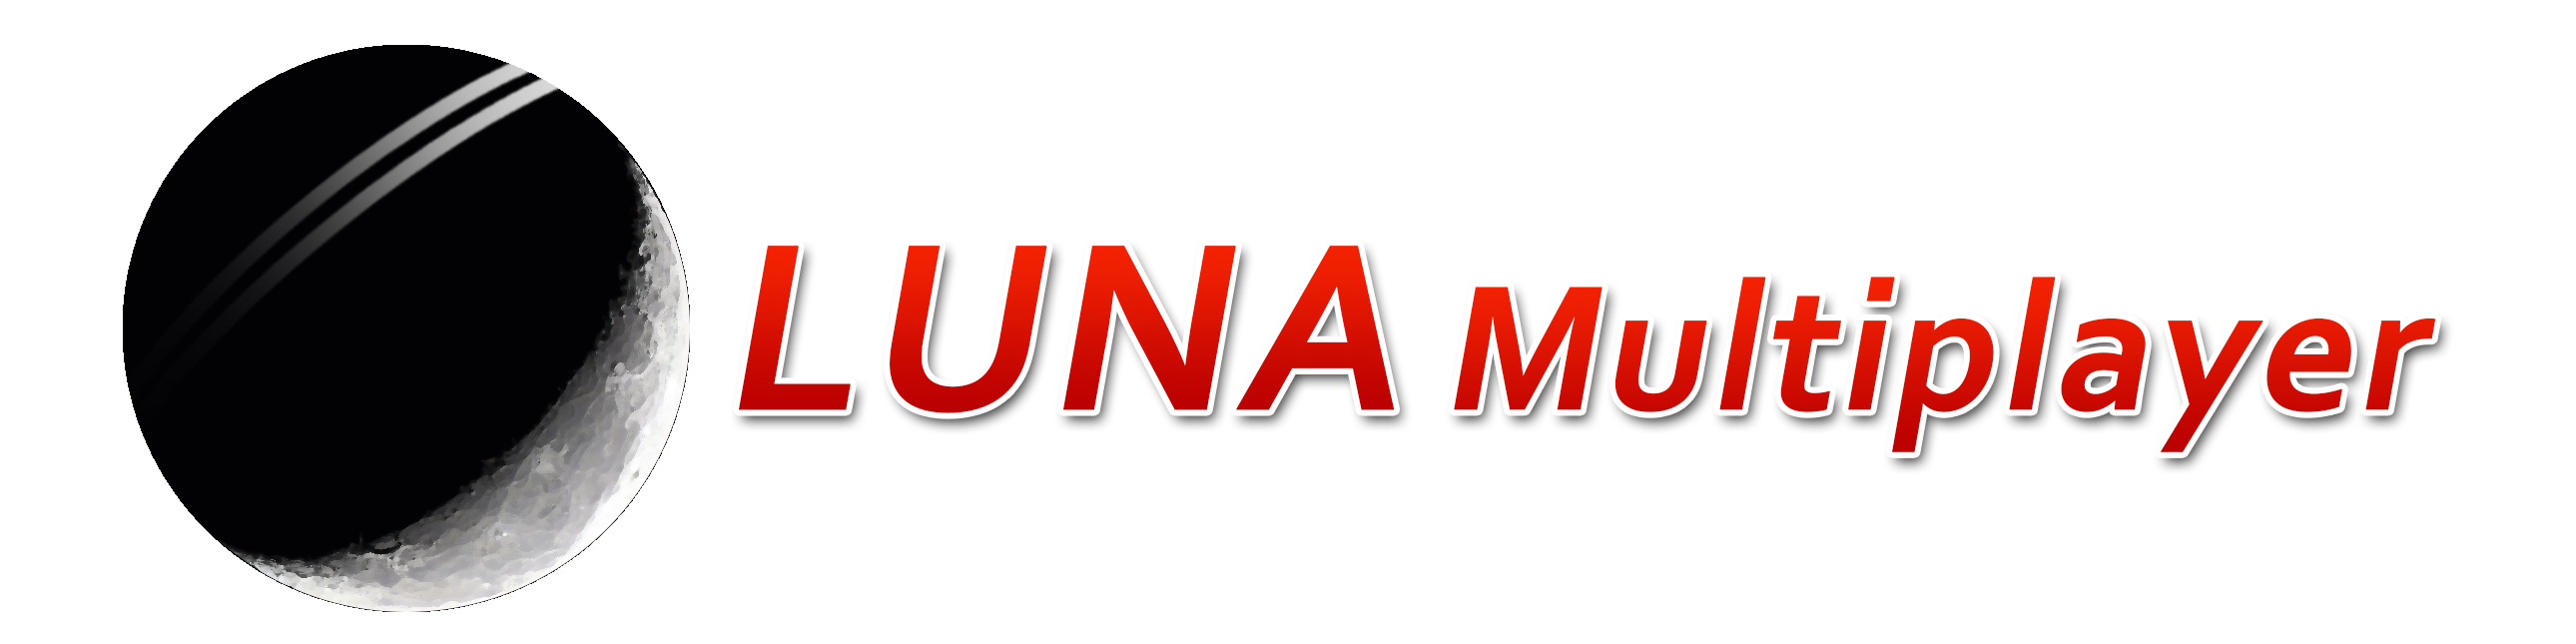 Luna multiplayer logo